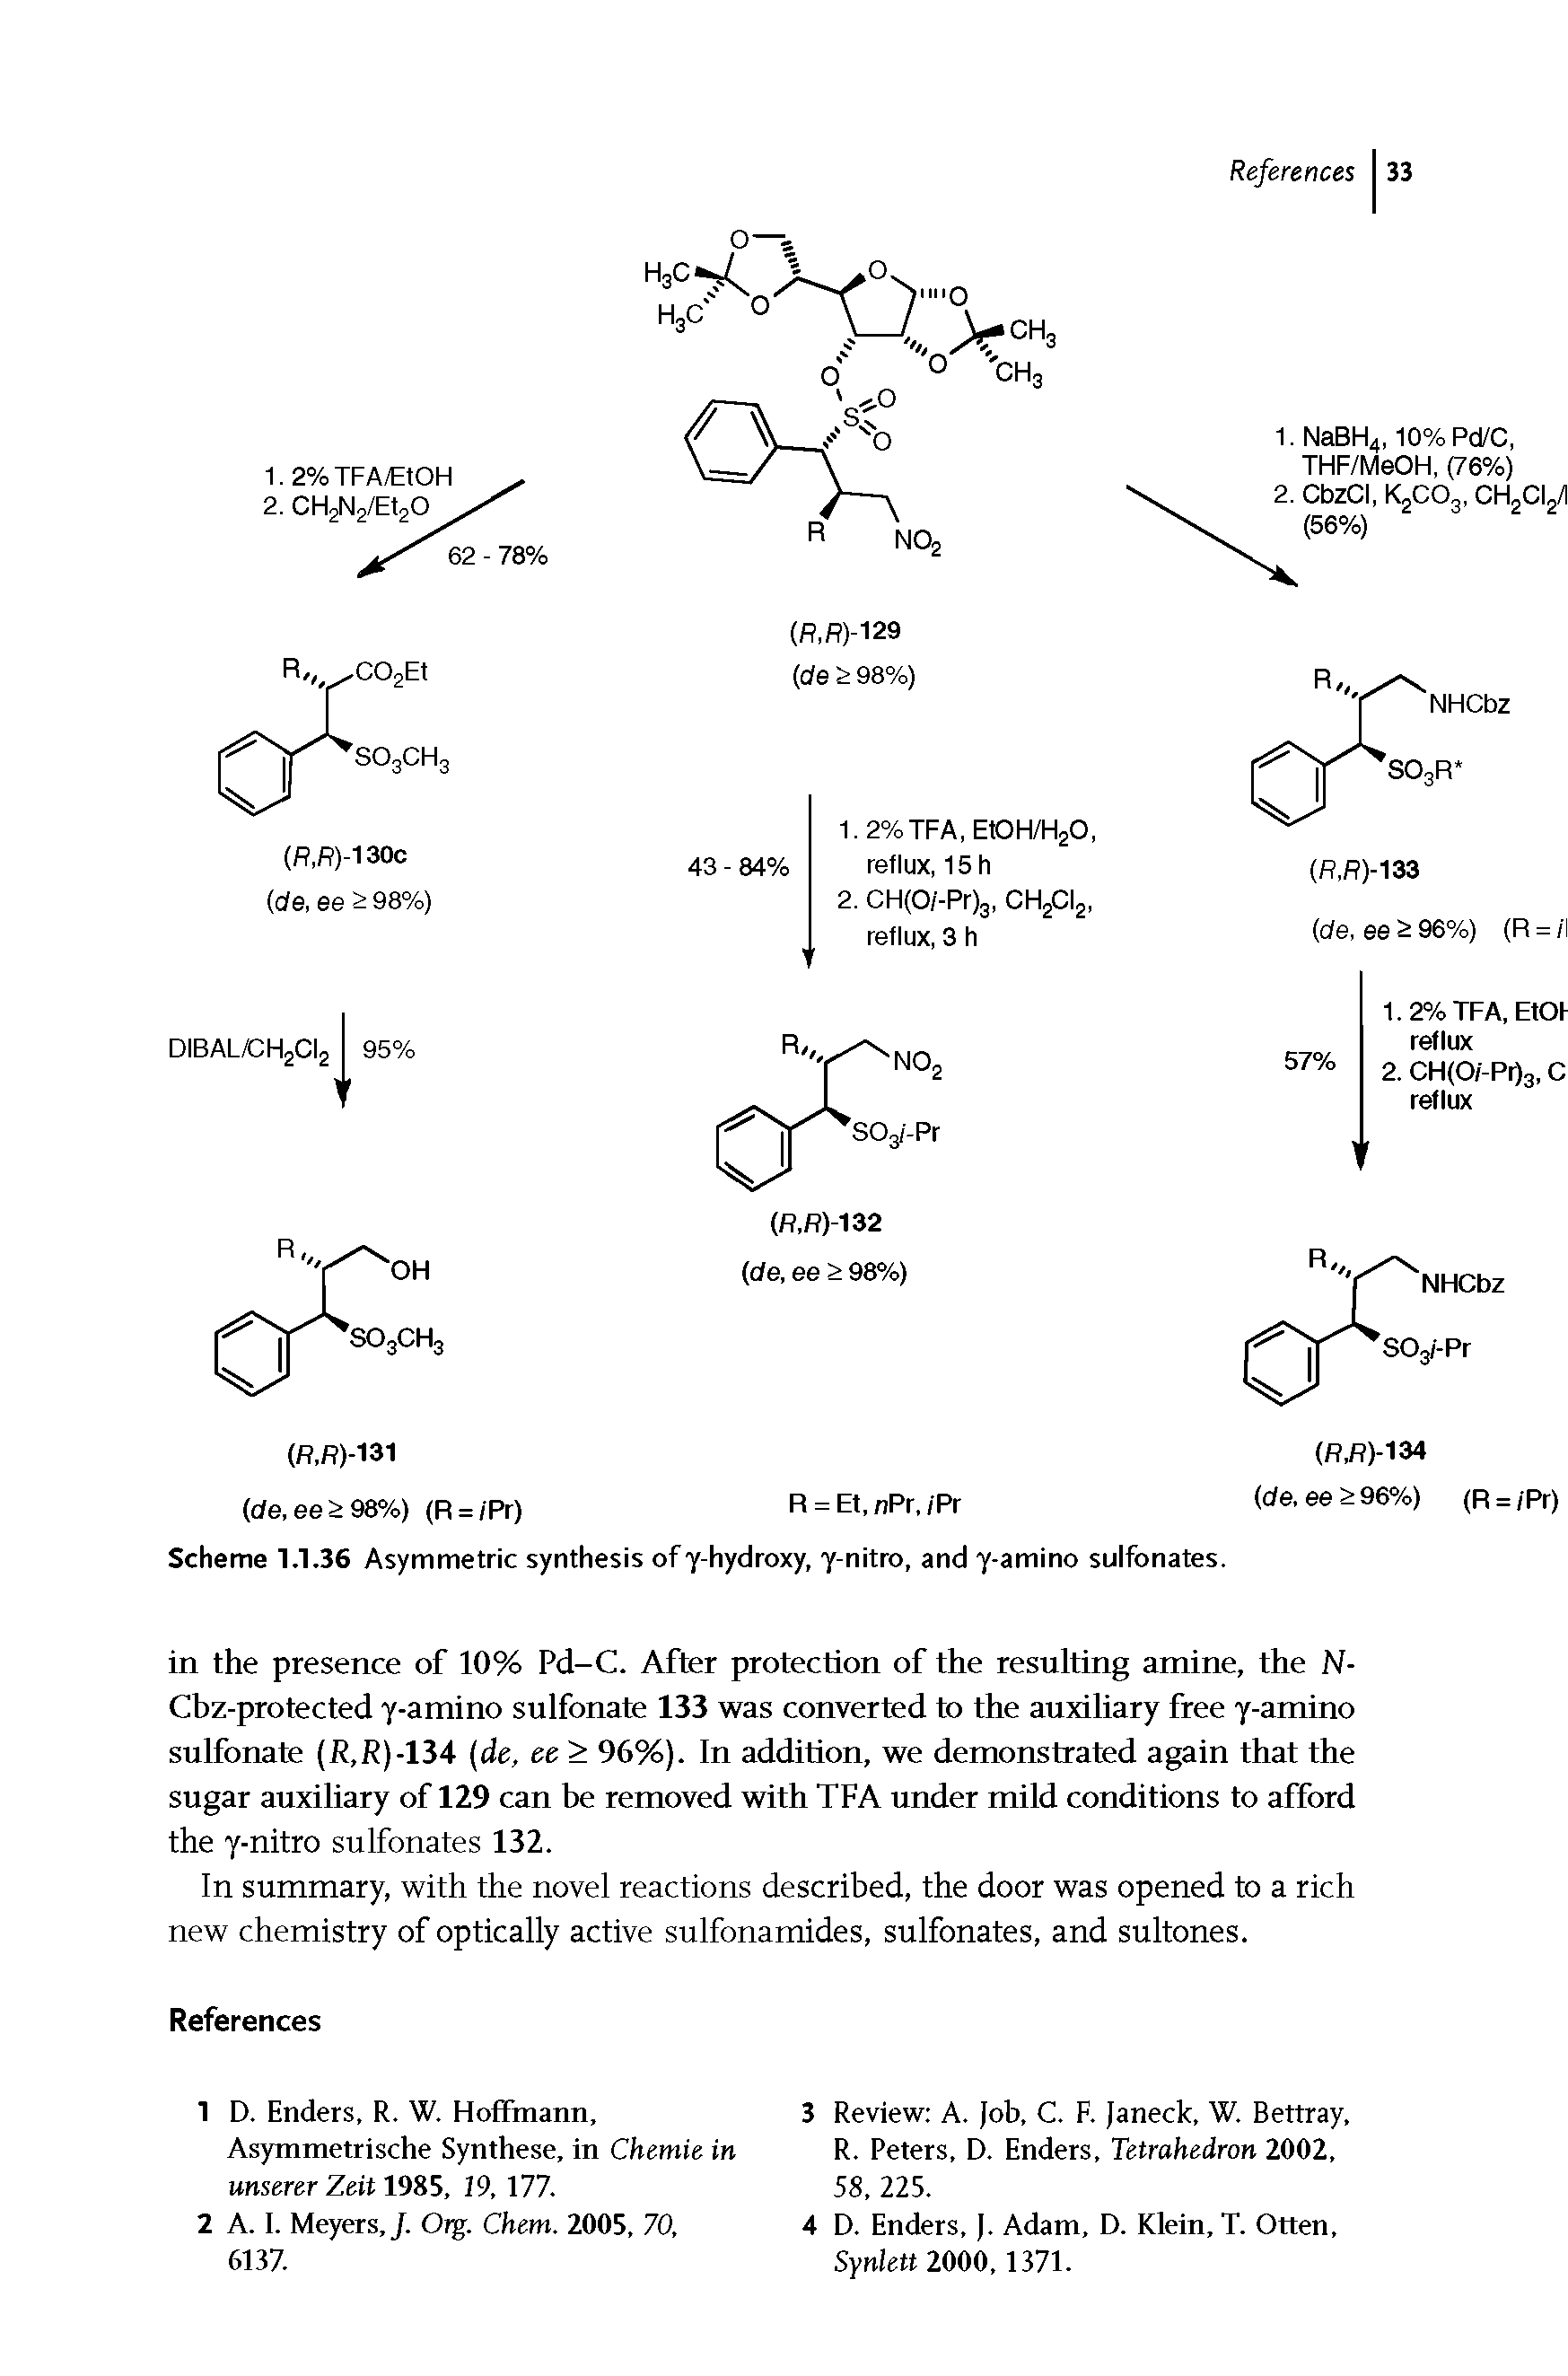 Scheme 1.1.36 As)rmmetric synthesis ofy-hydroxy, y-nitro, and y-amino sulfonates.